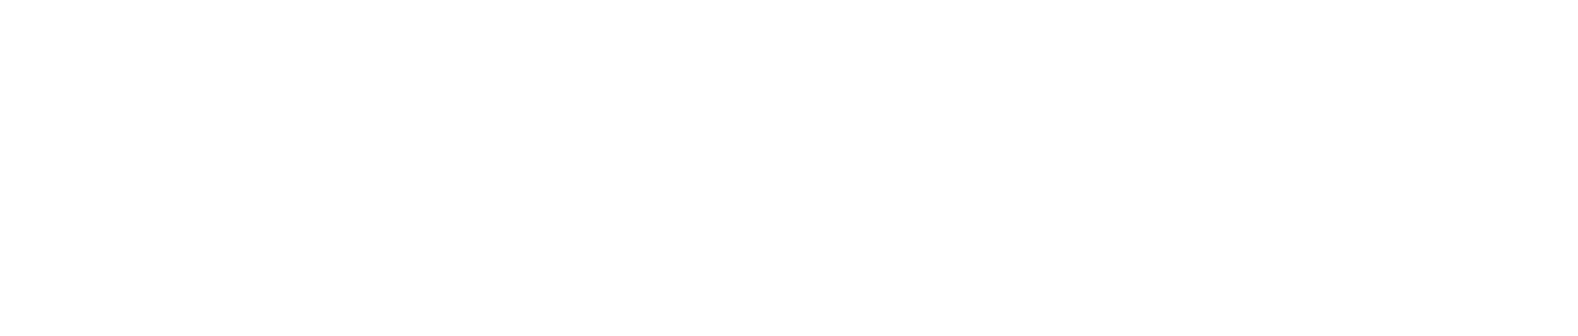 Aterian logo large for dark backgrounds (transparent PNG)